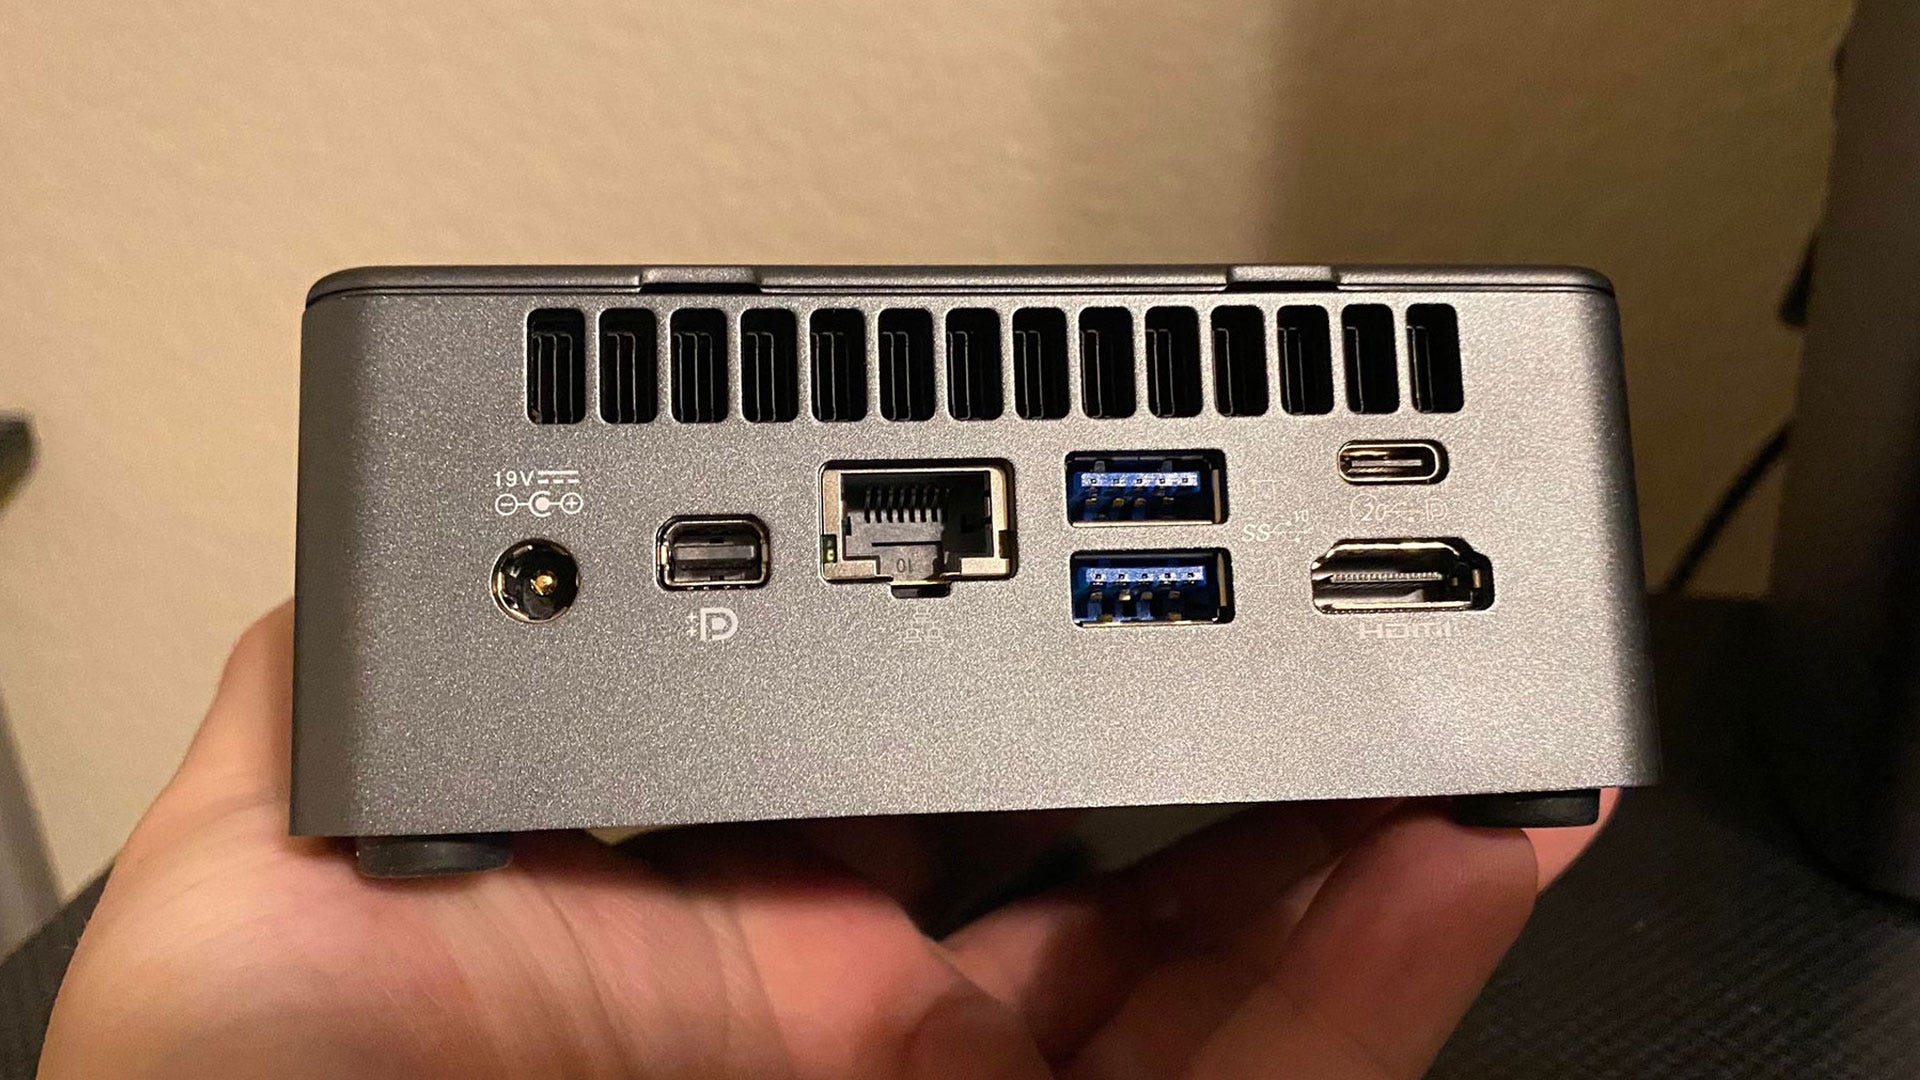 GEEKOM Mini IT11 PC showing back ports, including 2 USB, 1 USB4, 1 HDMI, 1 DisplayPort, and 1 Ethernet